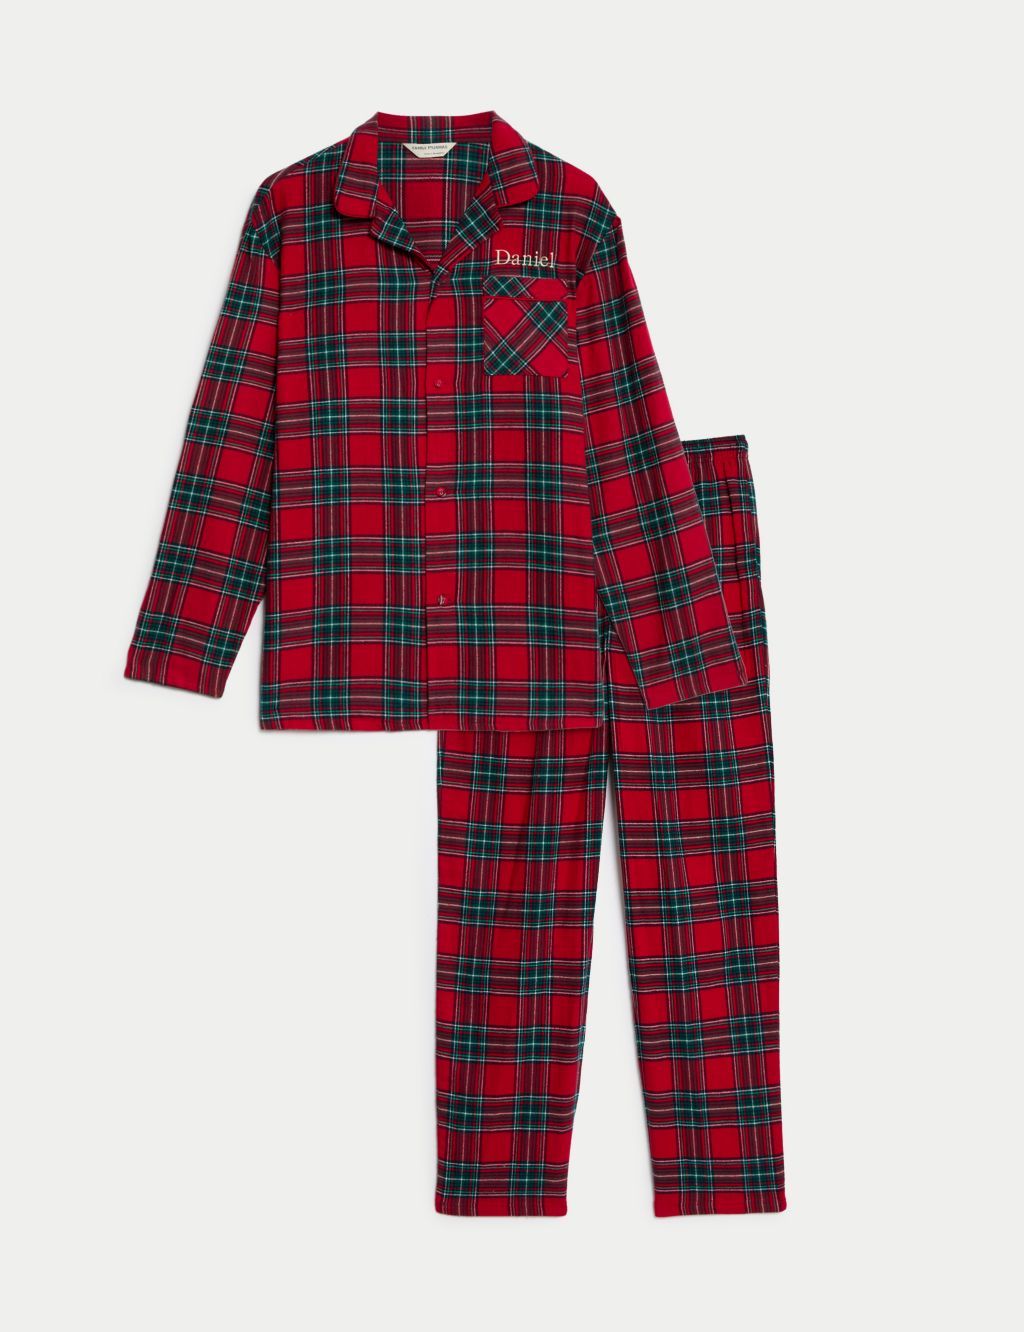 Personalised Men's Checked Pyjama Set